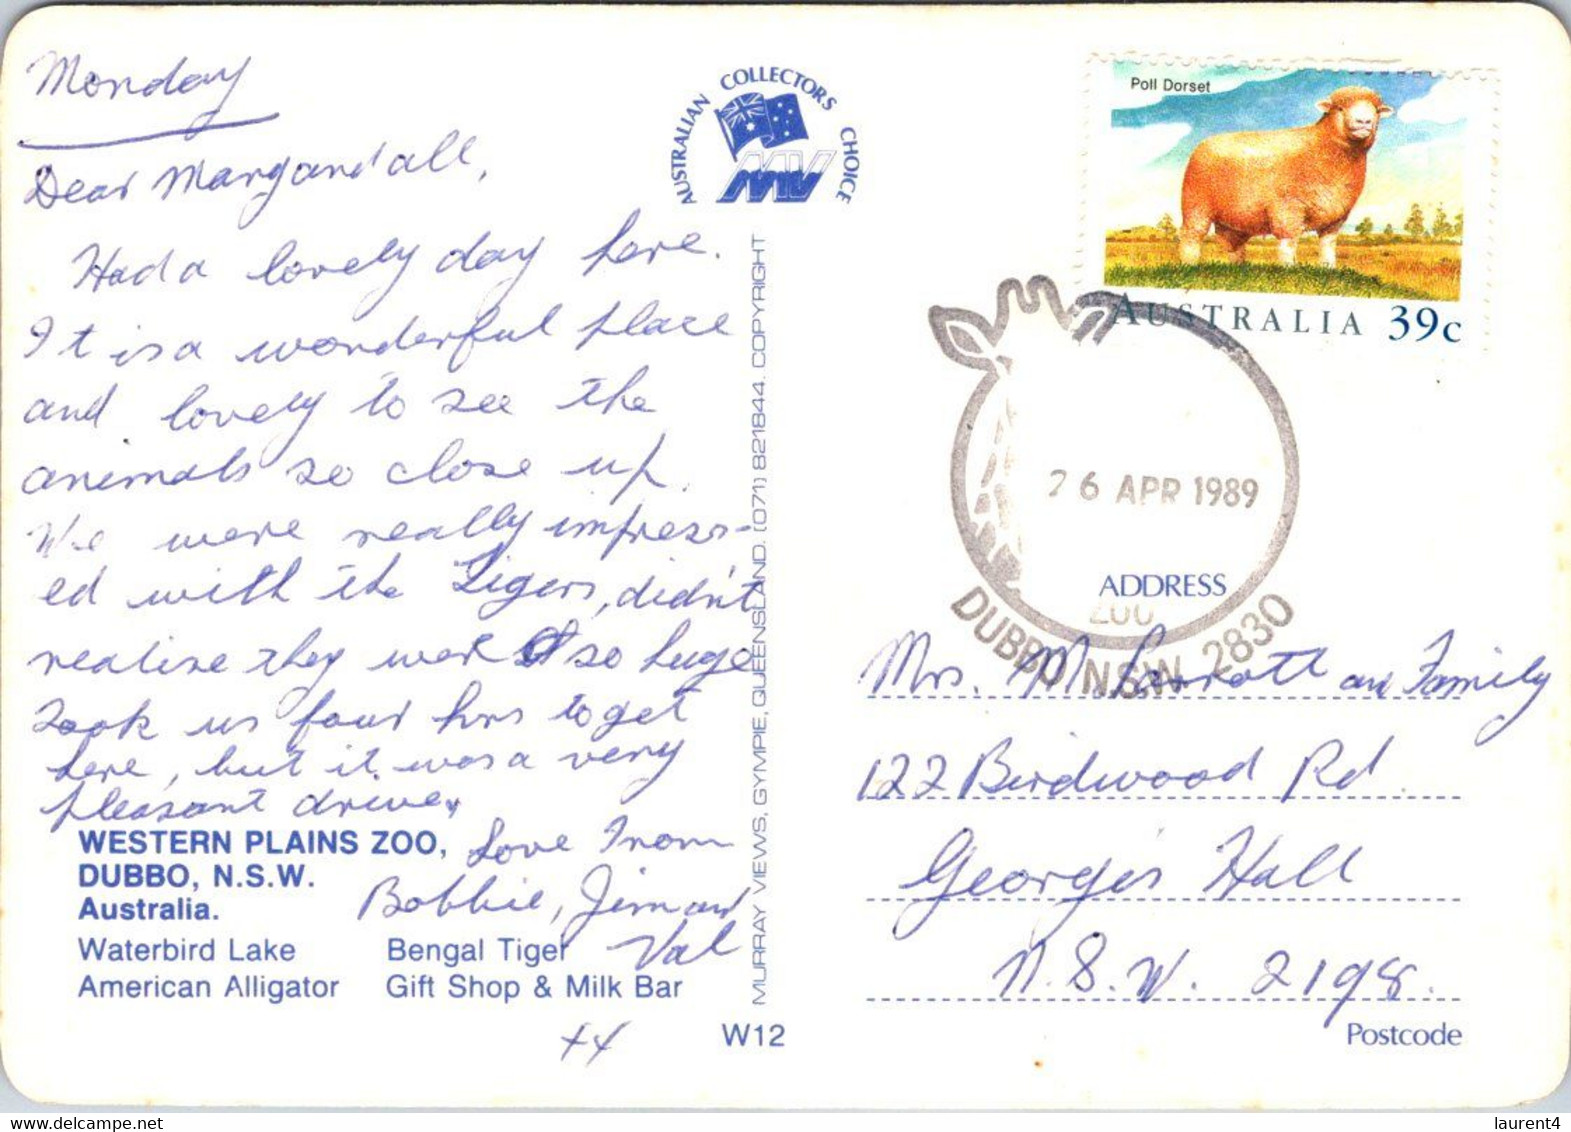 (2 P 15) Australia - NSW - Dubbo Western Plain Zoo - With Special Zoo Giraffe Postmark 1989 Over Sheep Stamp - Dubbo